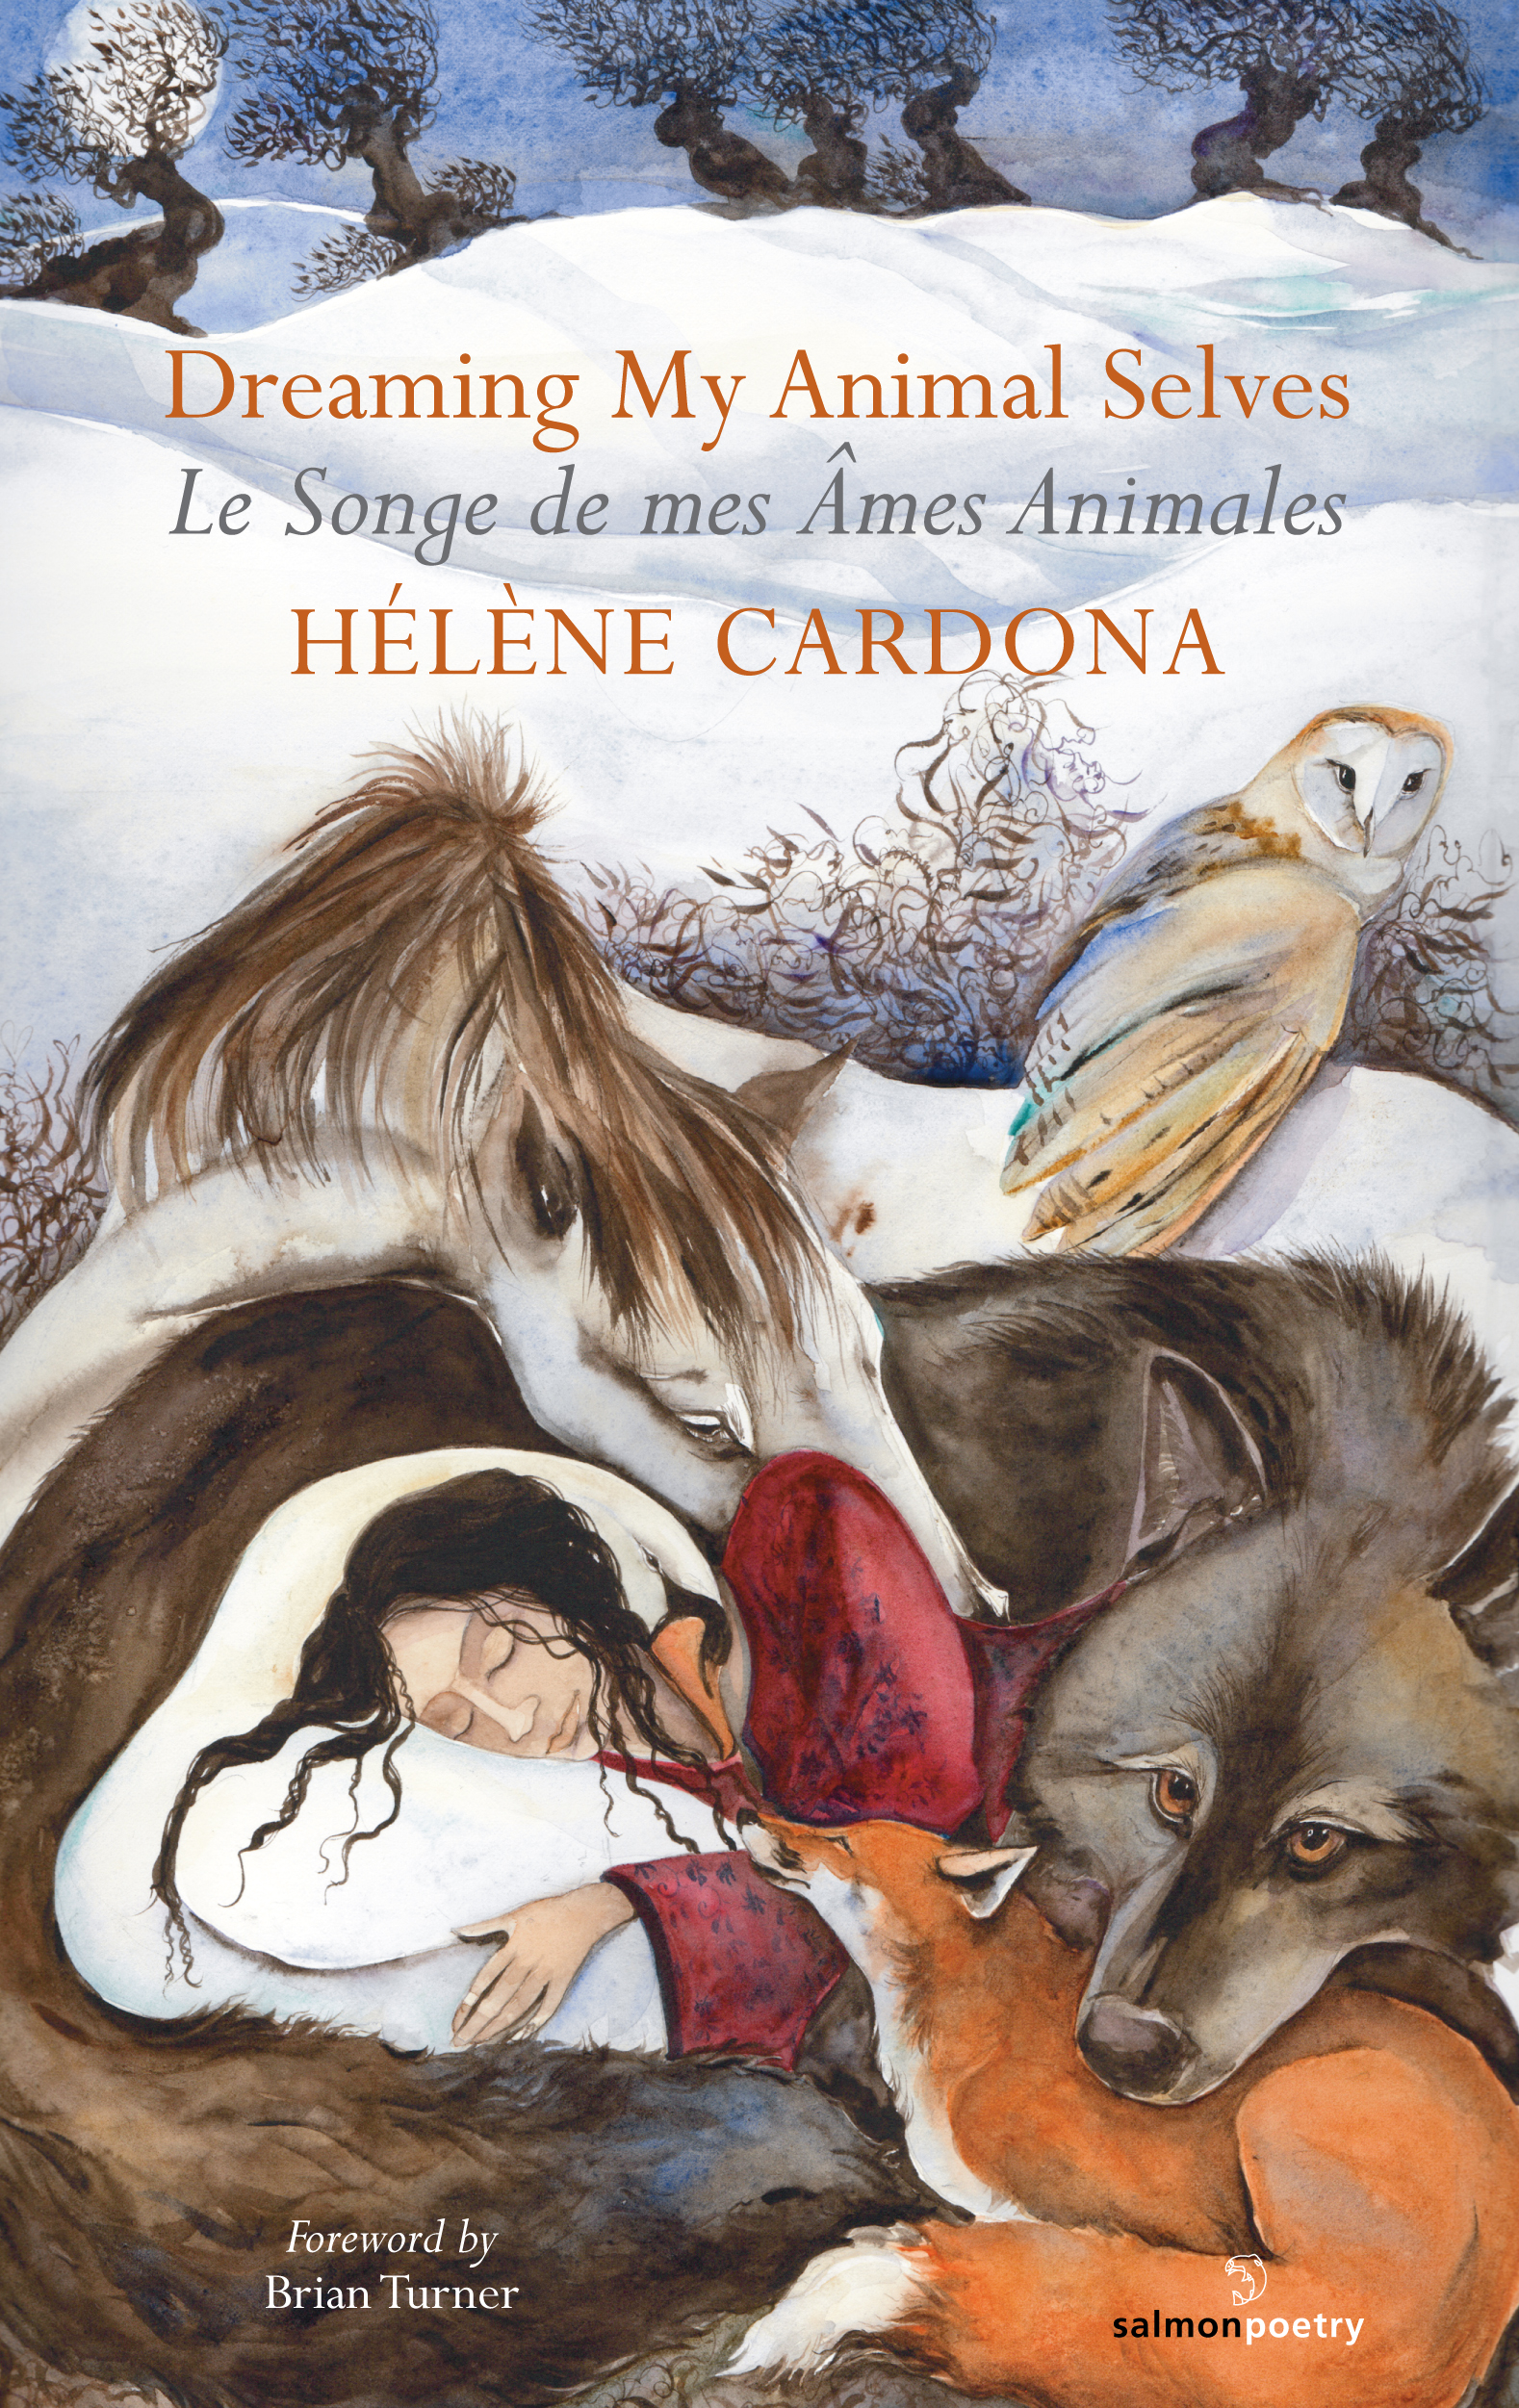 Dreaming My Animal Selves” – Hélène Cardona